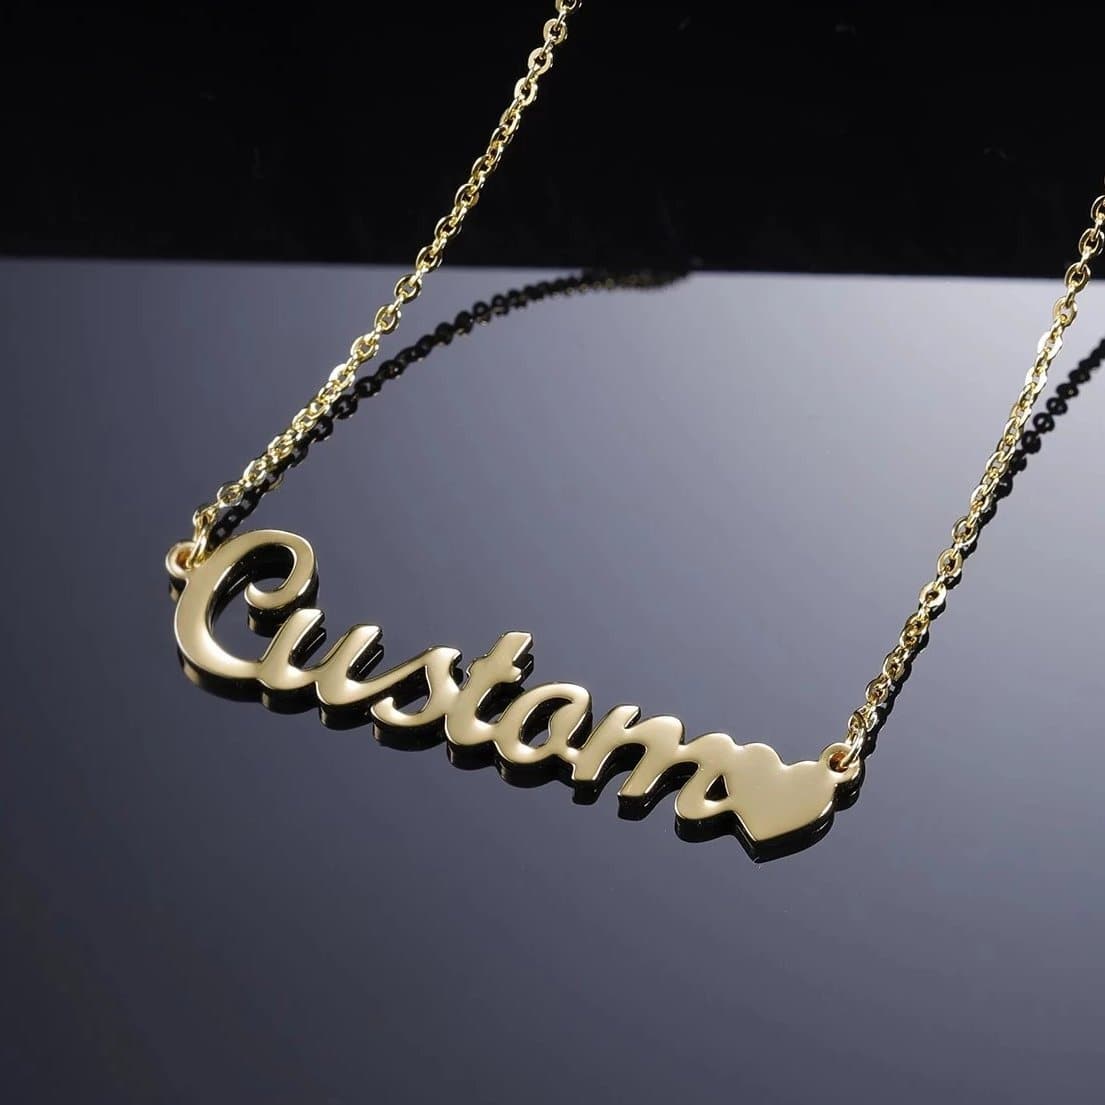 18 K Gold Custom Design Necklace with Heart Design